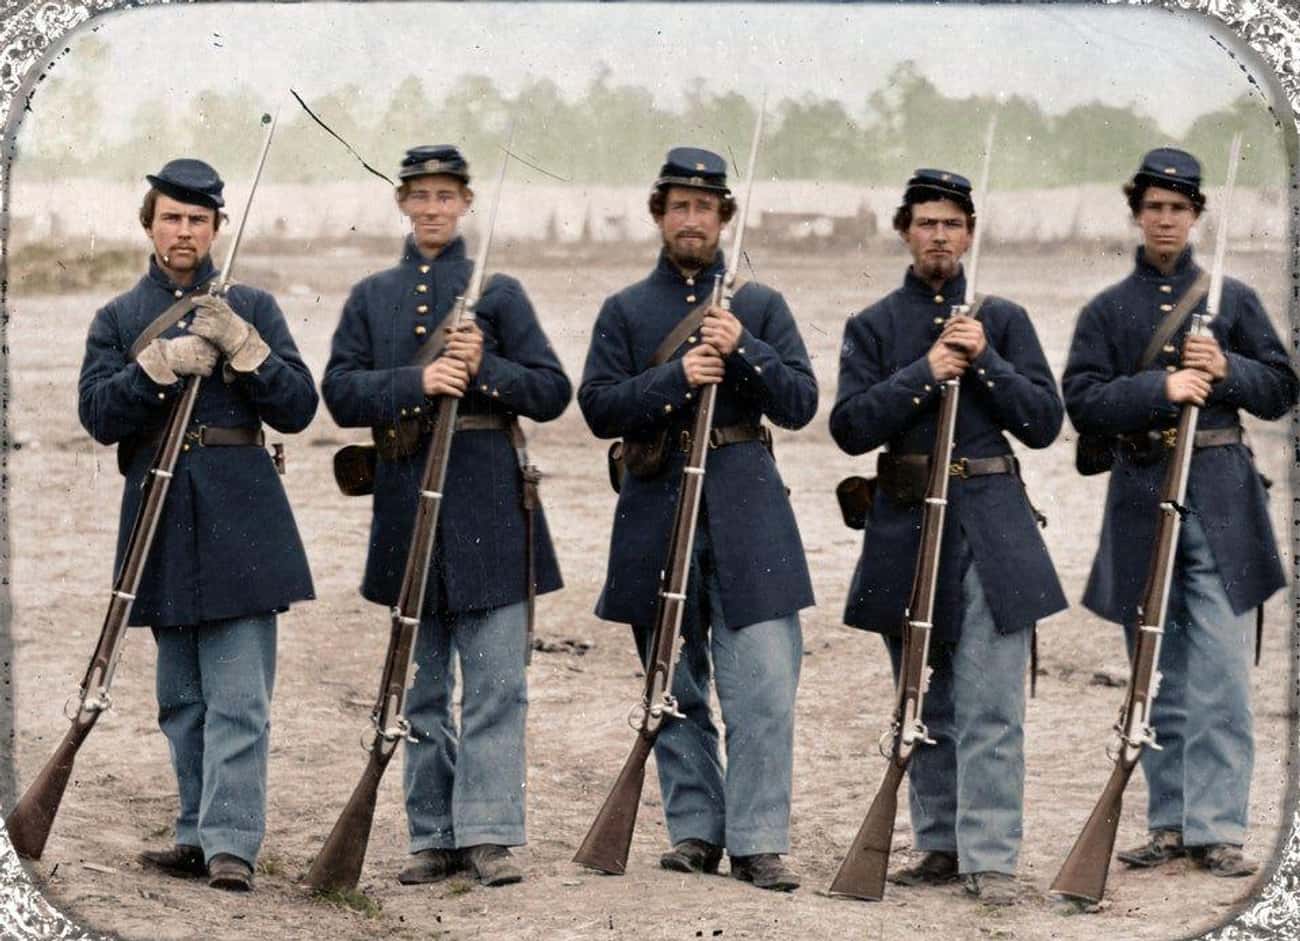 Union Soldiers, Massachusetts Volunteer Militia, Date Unknown